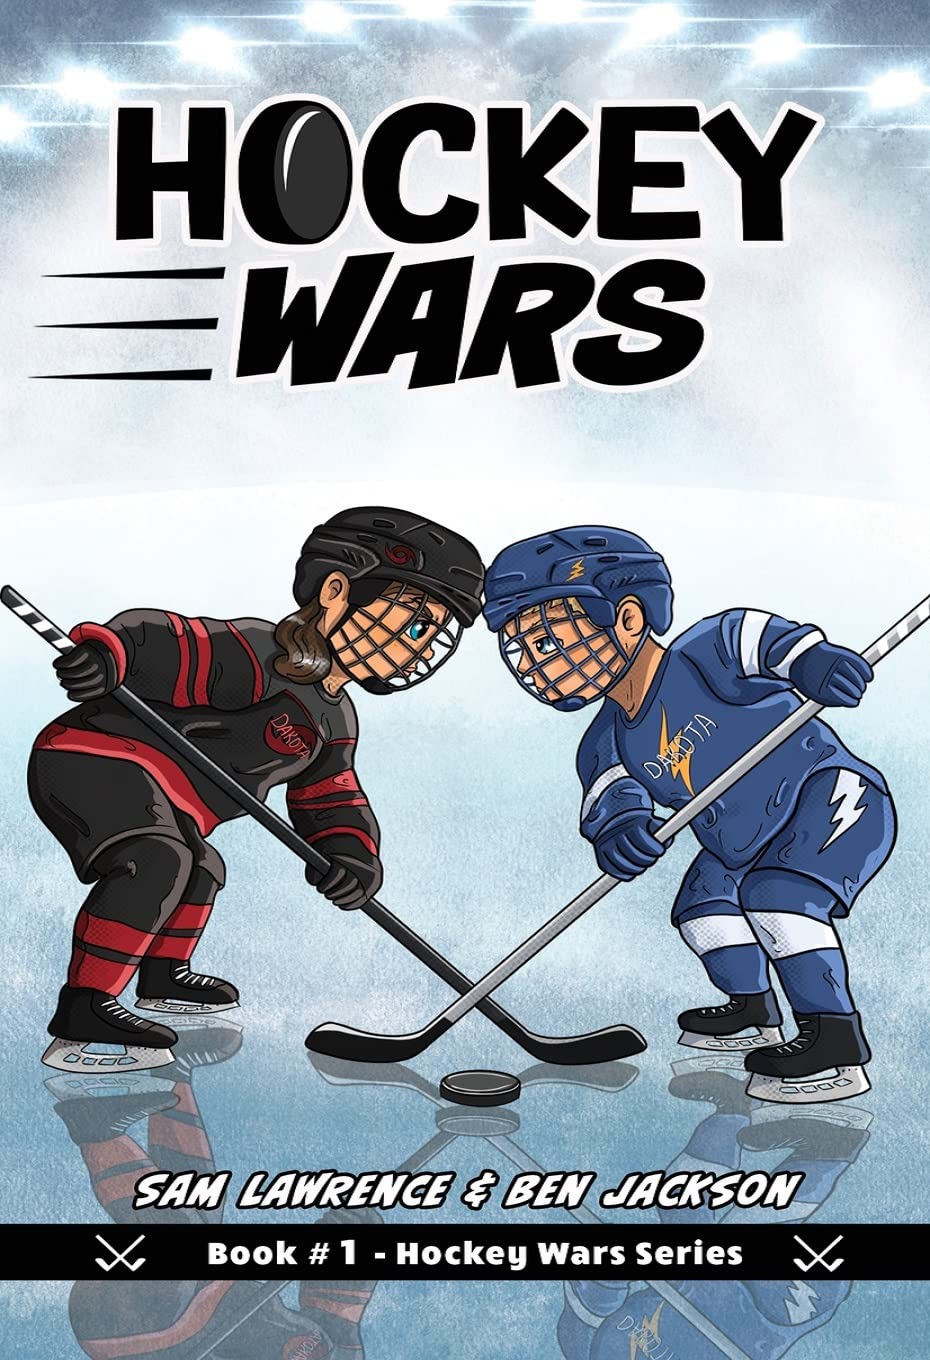 The Hockey Wars Book